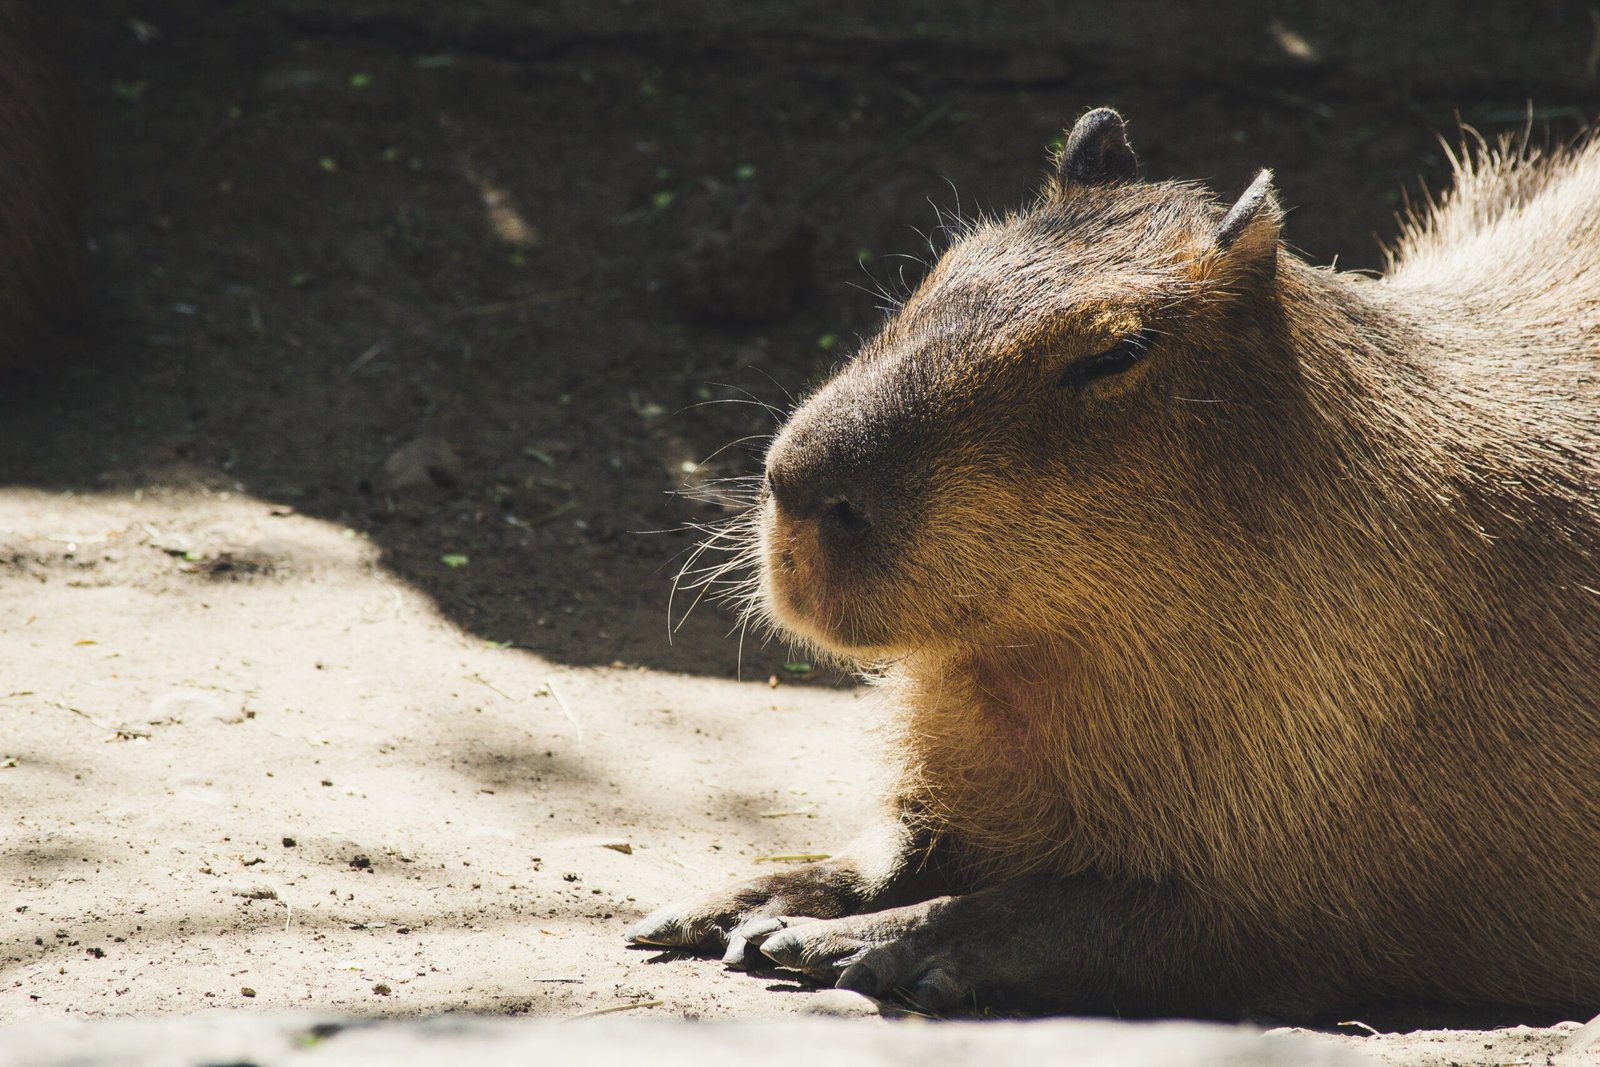 Capybara Splashing Water on Its Head